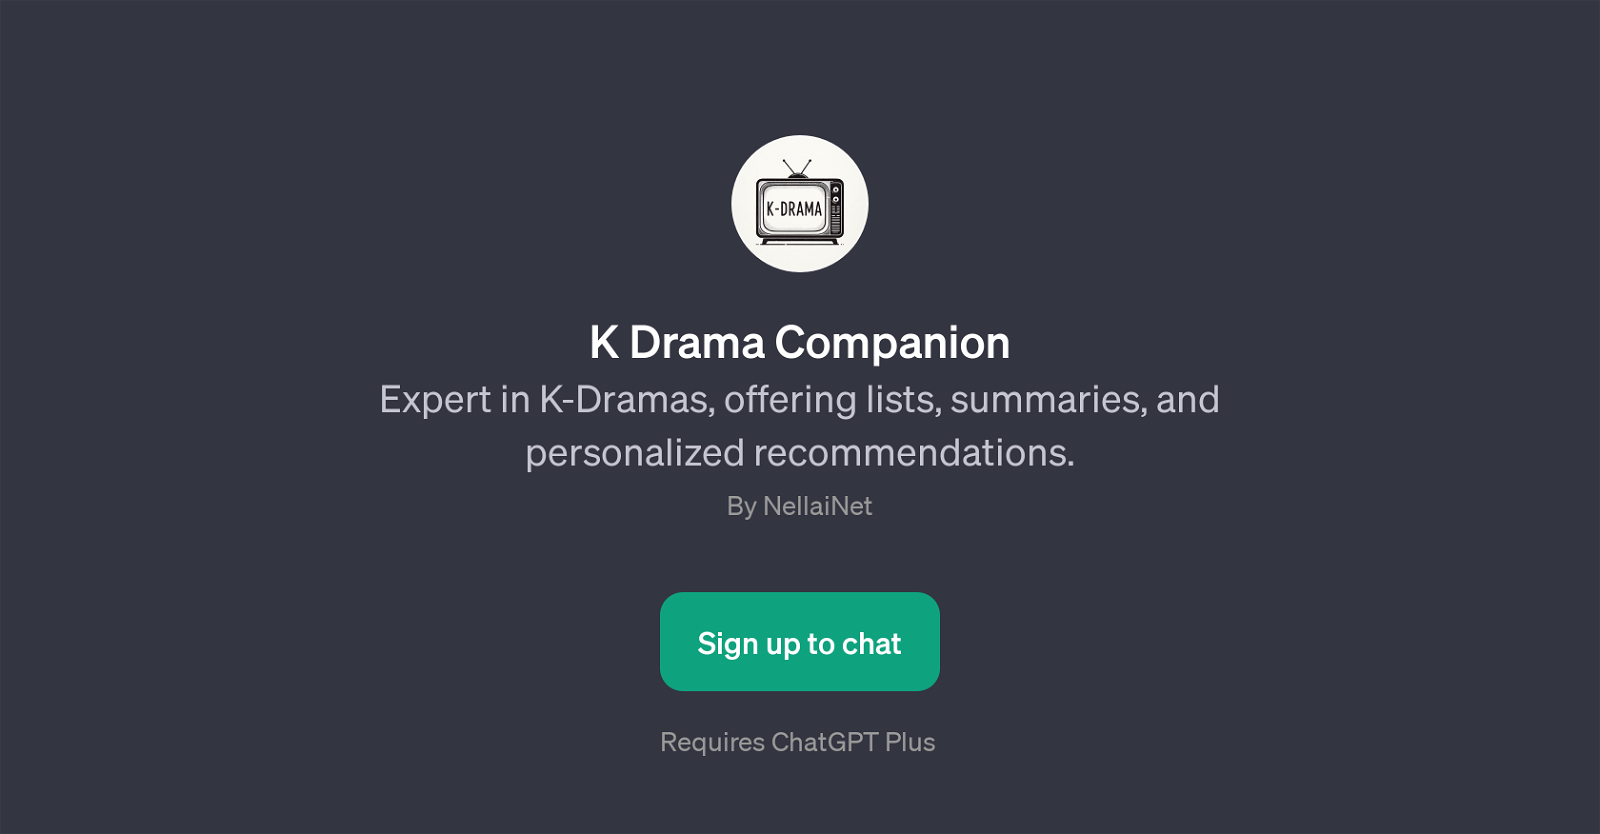 K Drama Companion website